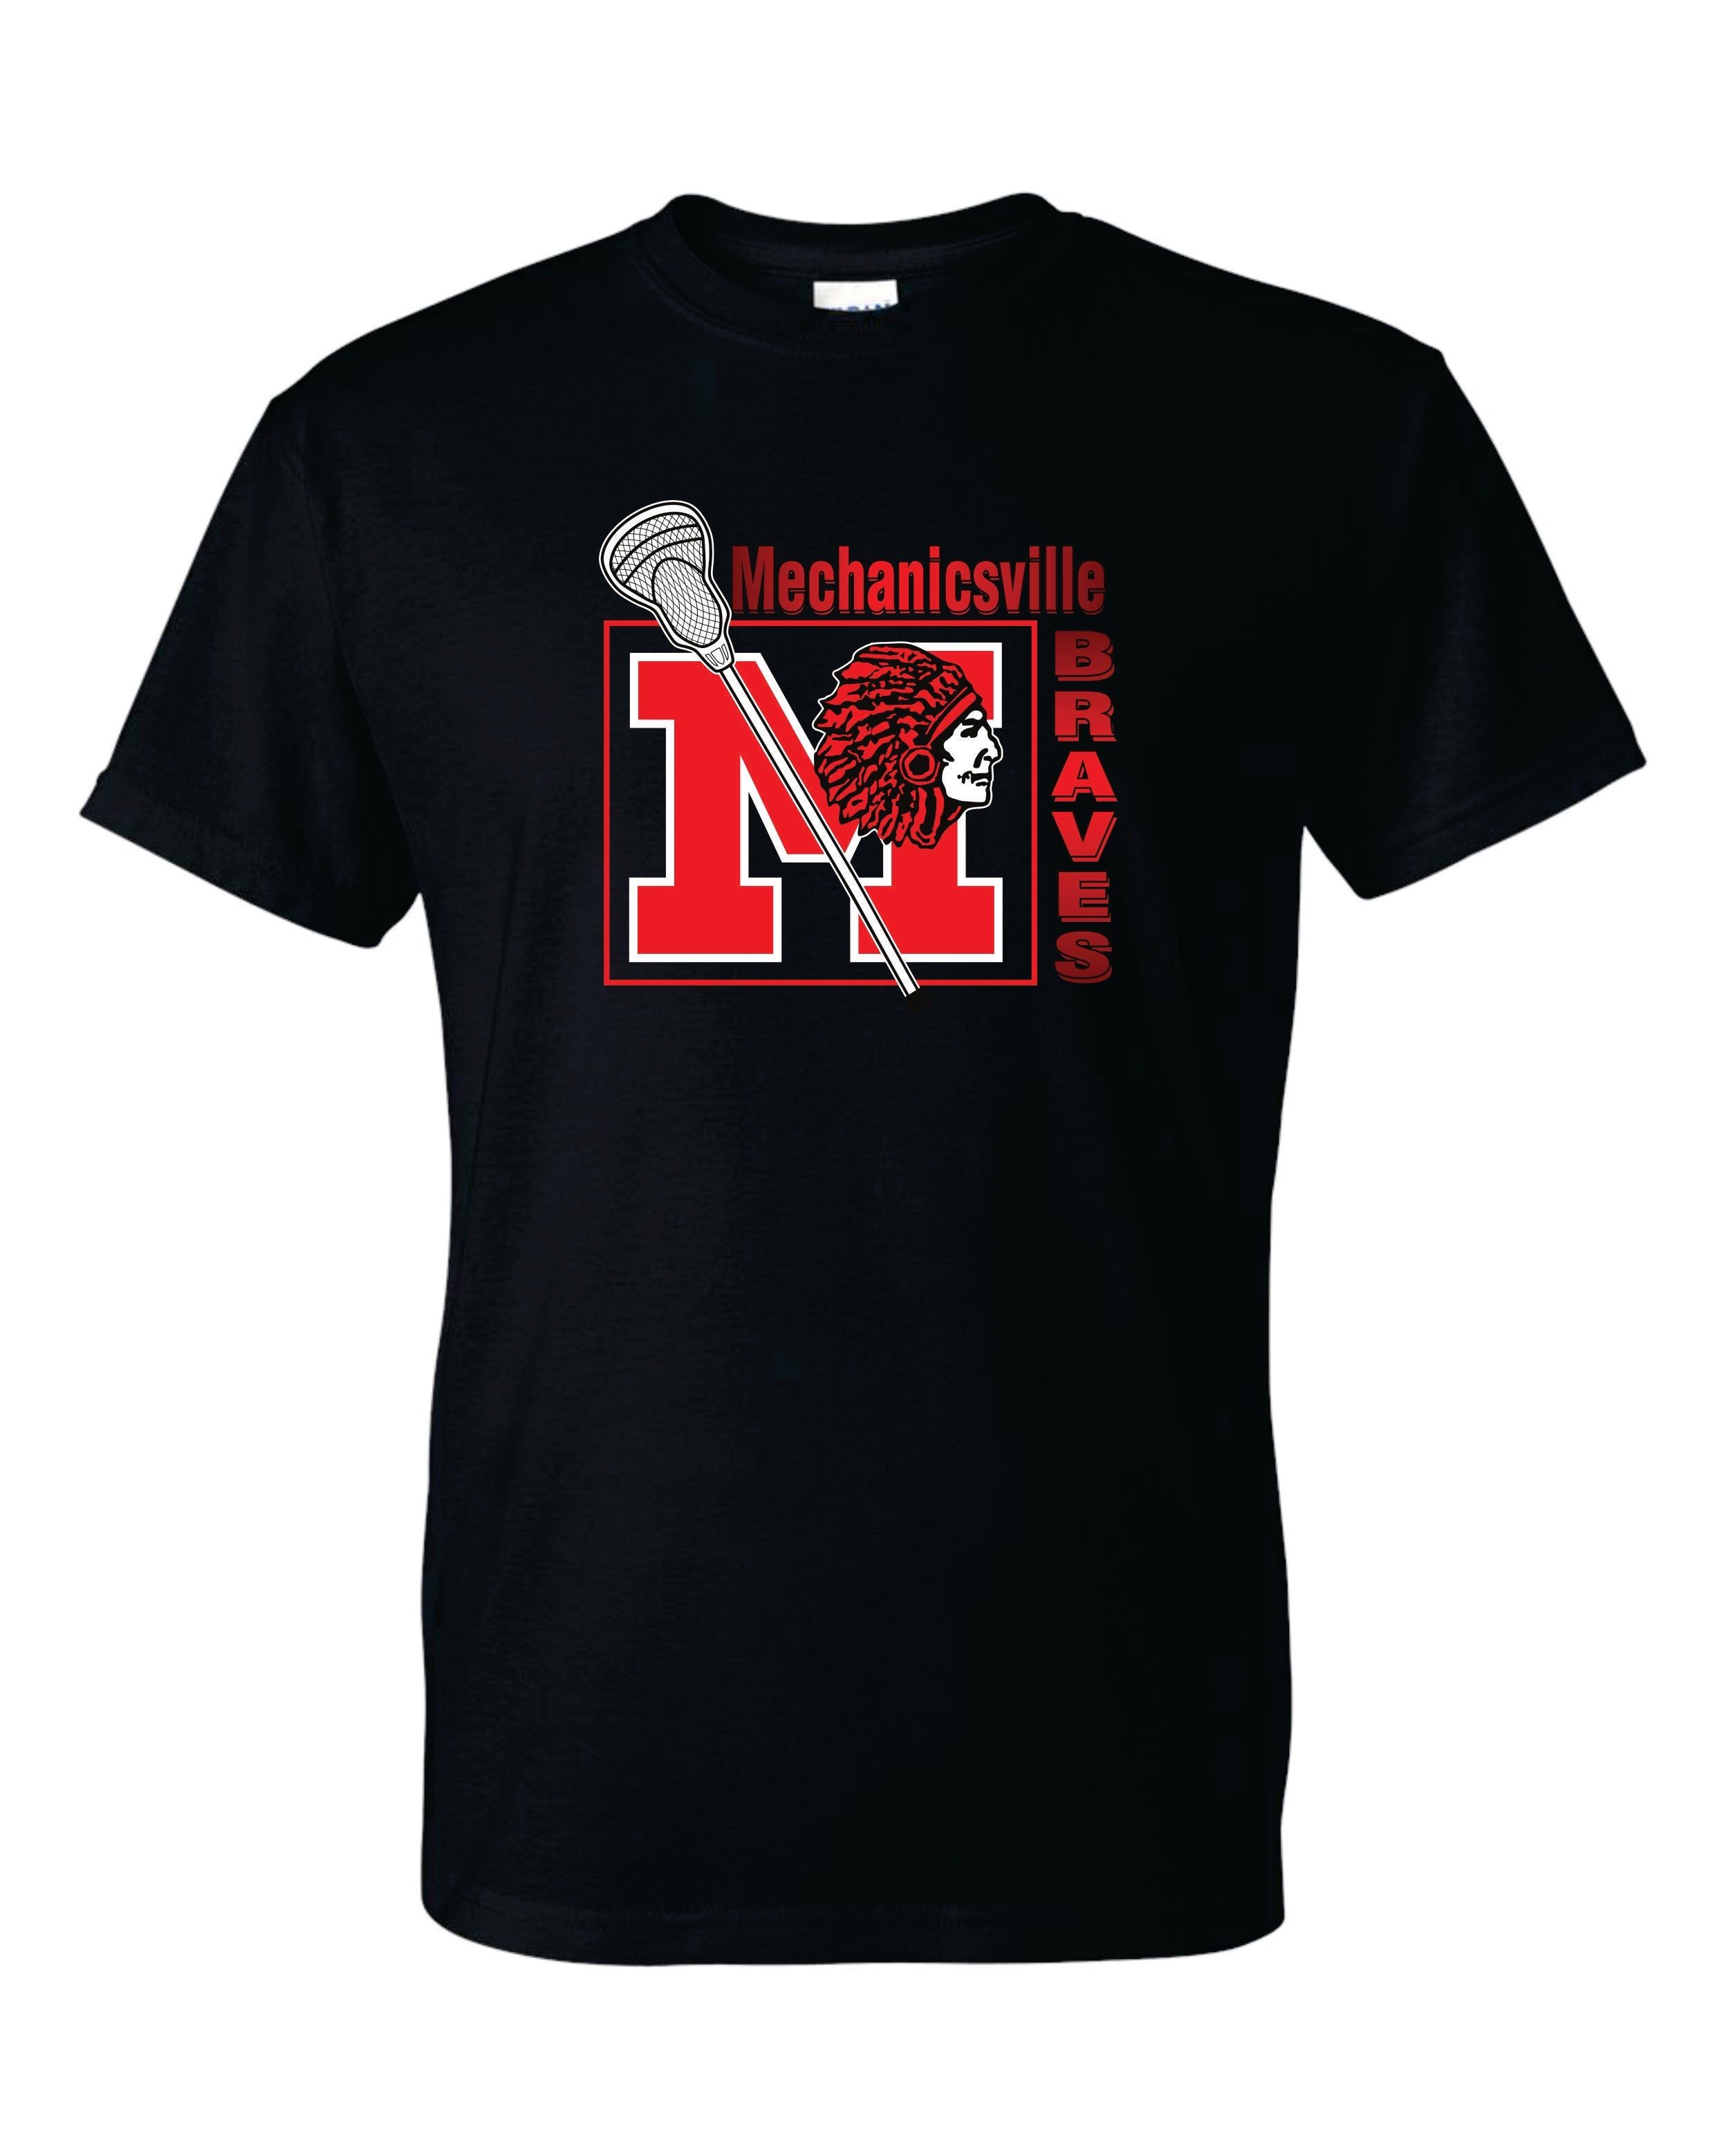 Mechanicsville Braves Short Sleeve T-Shirt 50/50 Blend YOUTH - LAX